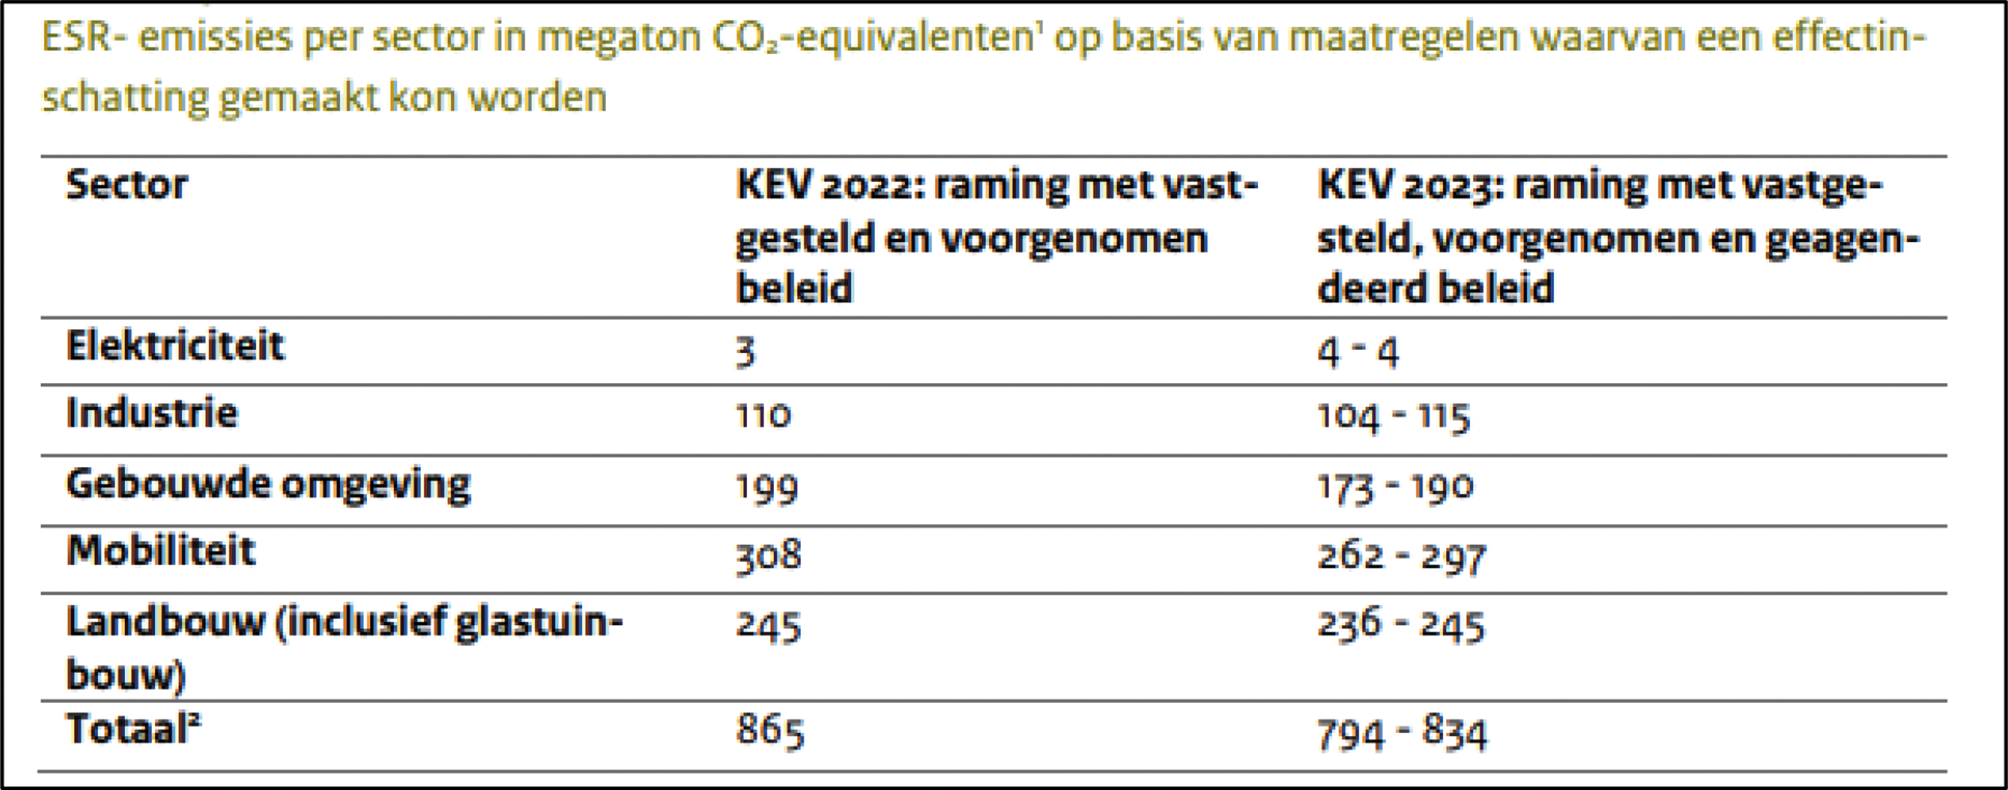 Tabel 9.6 ESR-emissies per sector